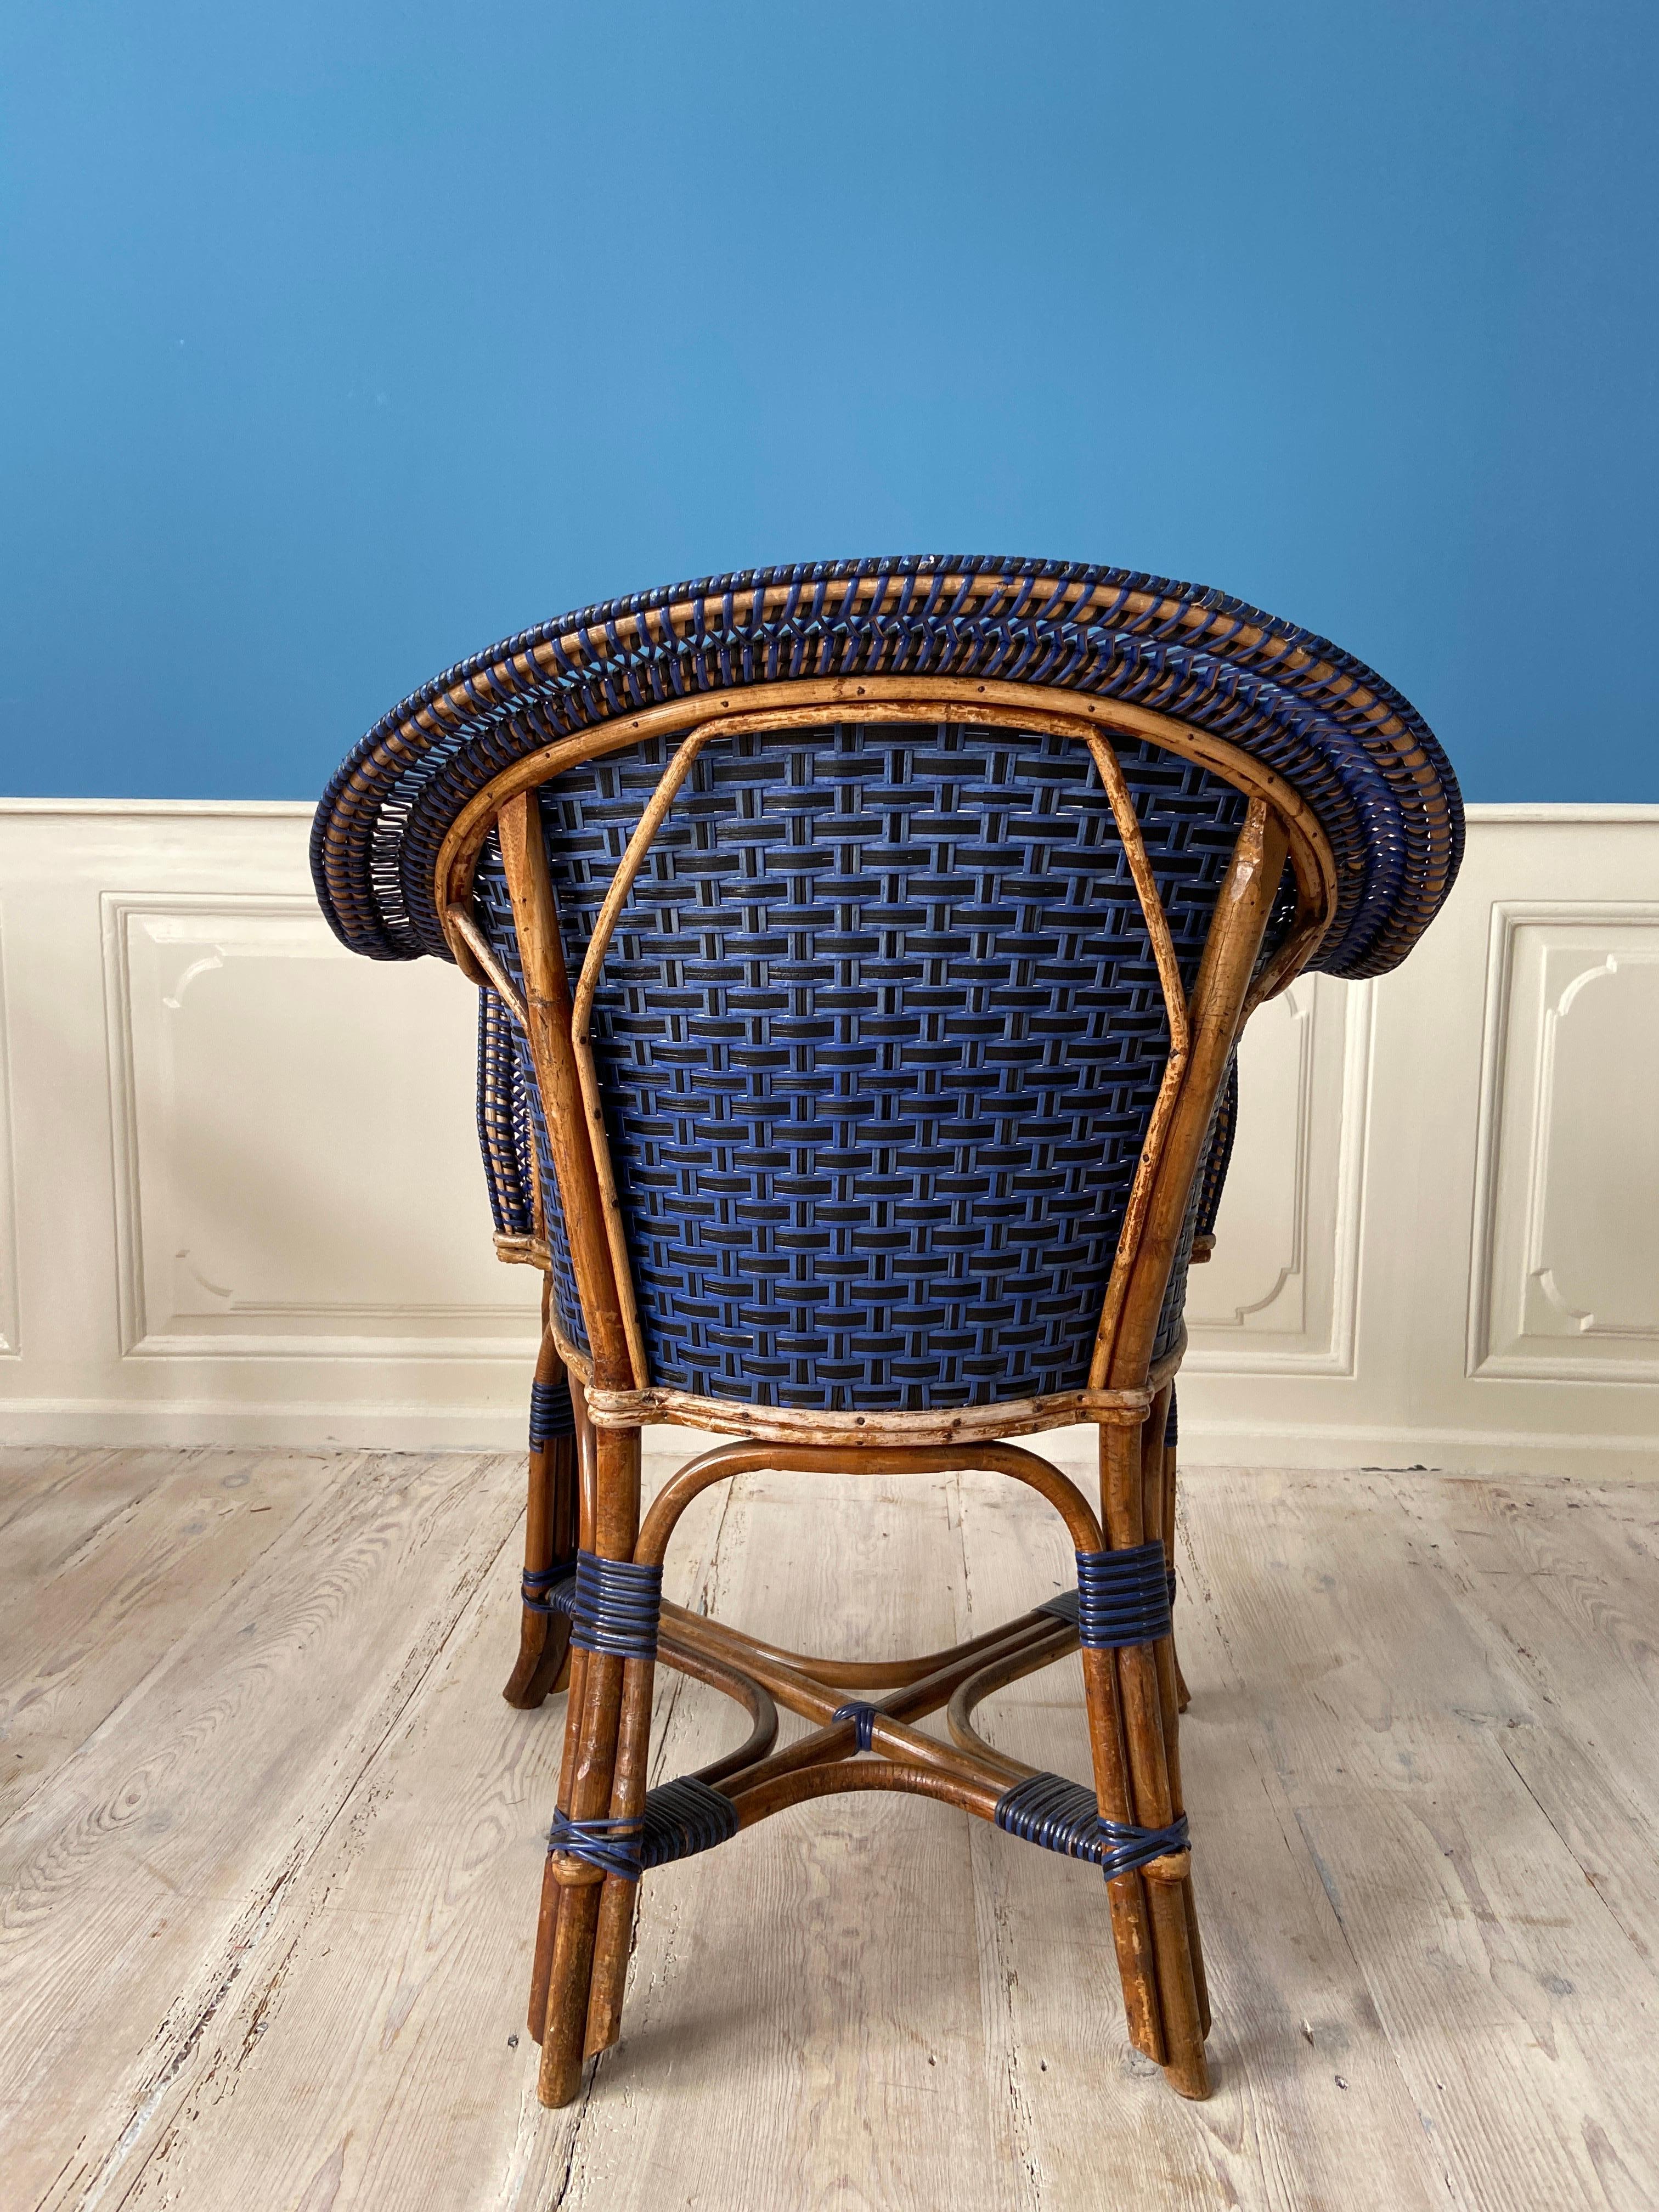 Vintage Complete Rattan Furniture Set in Black and Blue, France, 20th Century For Sale 8